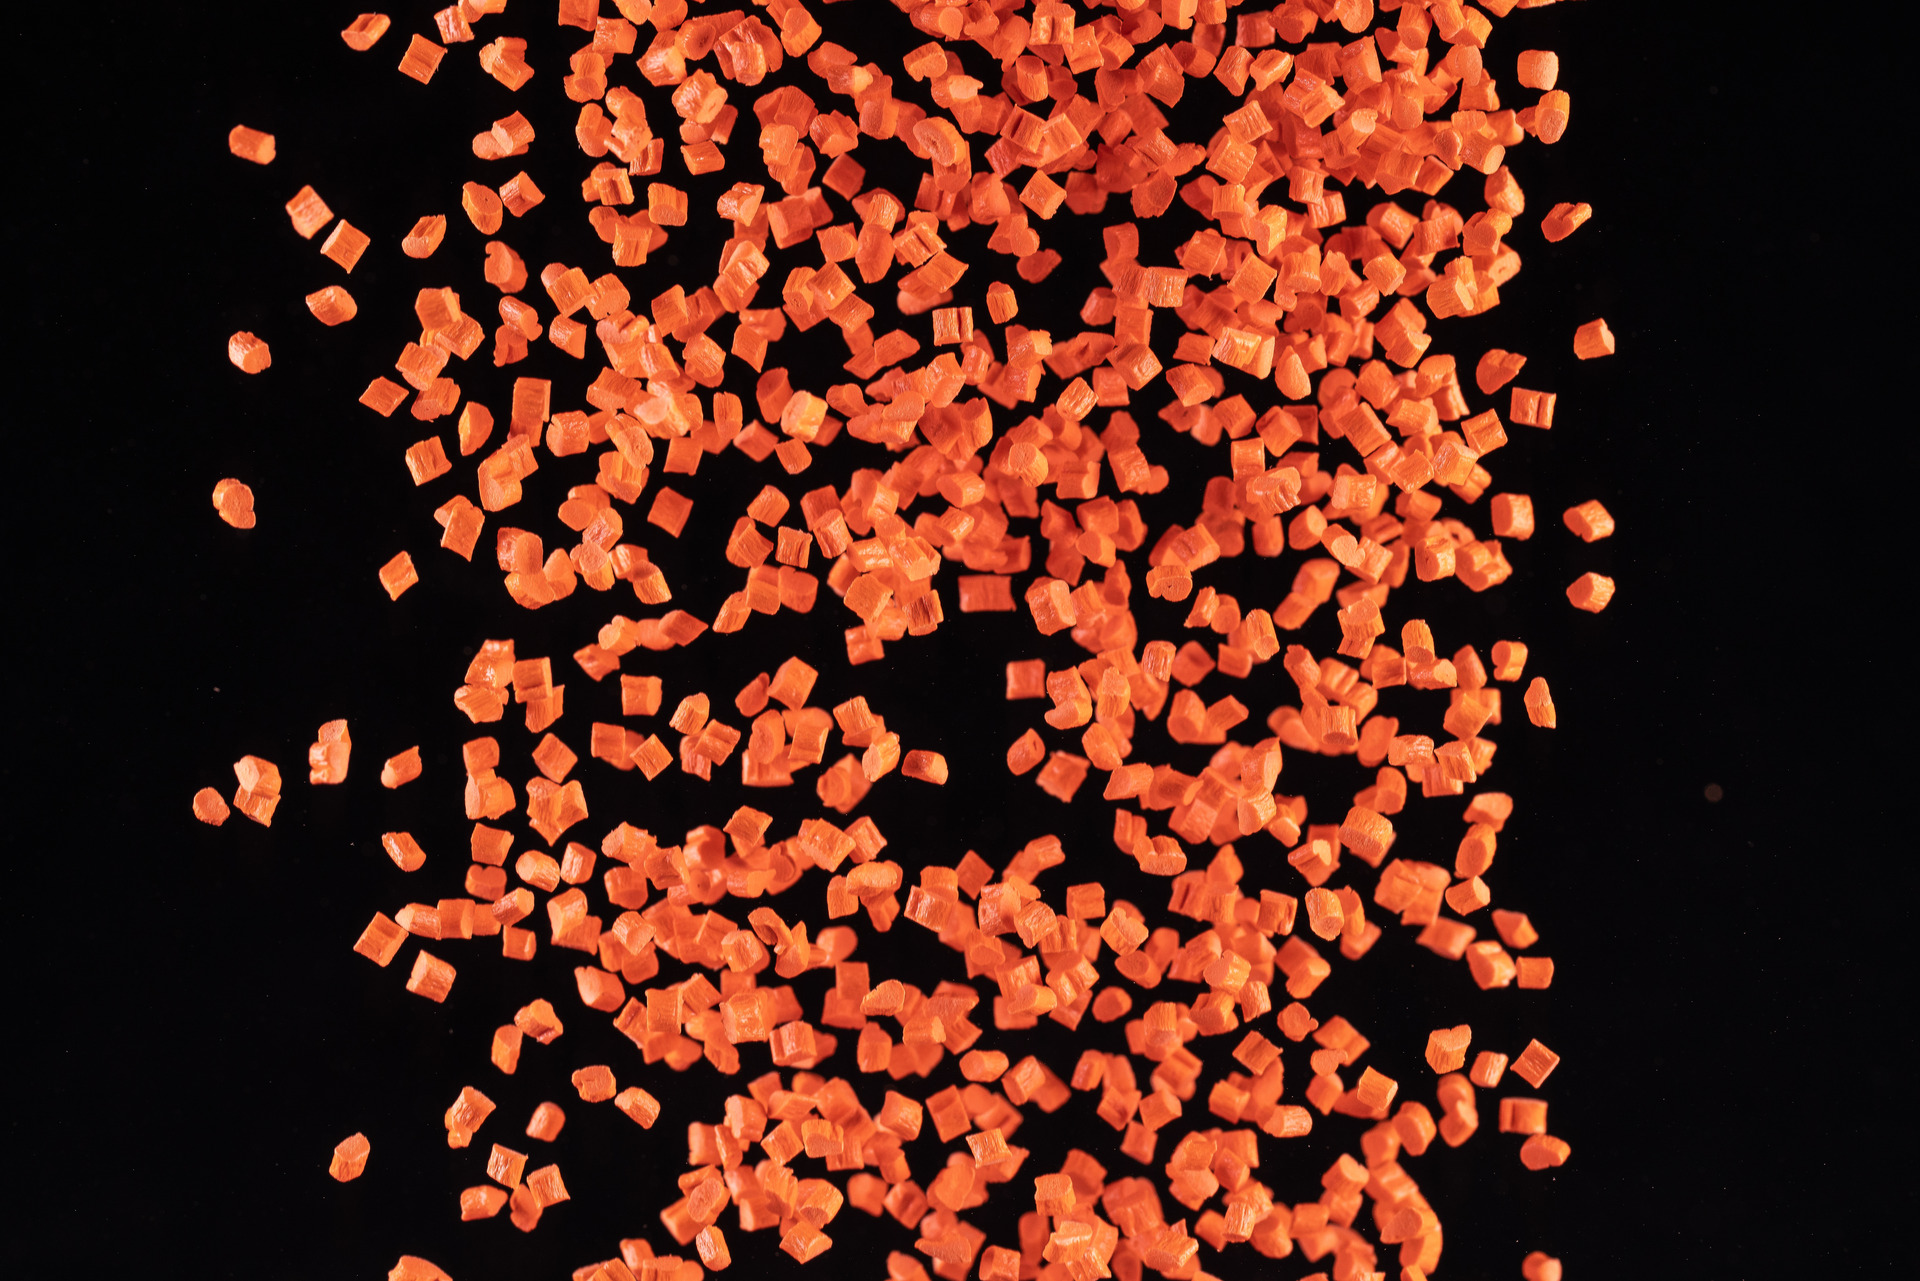 Orange Pocan plastic granules against a black background